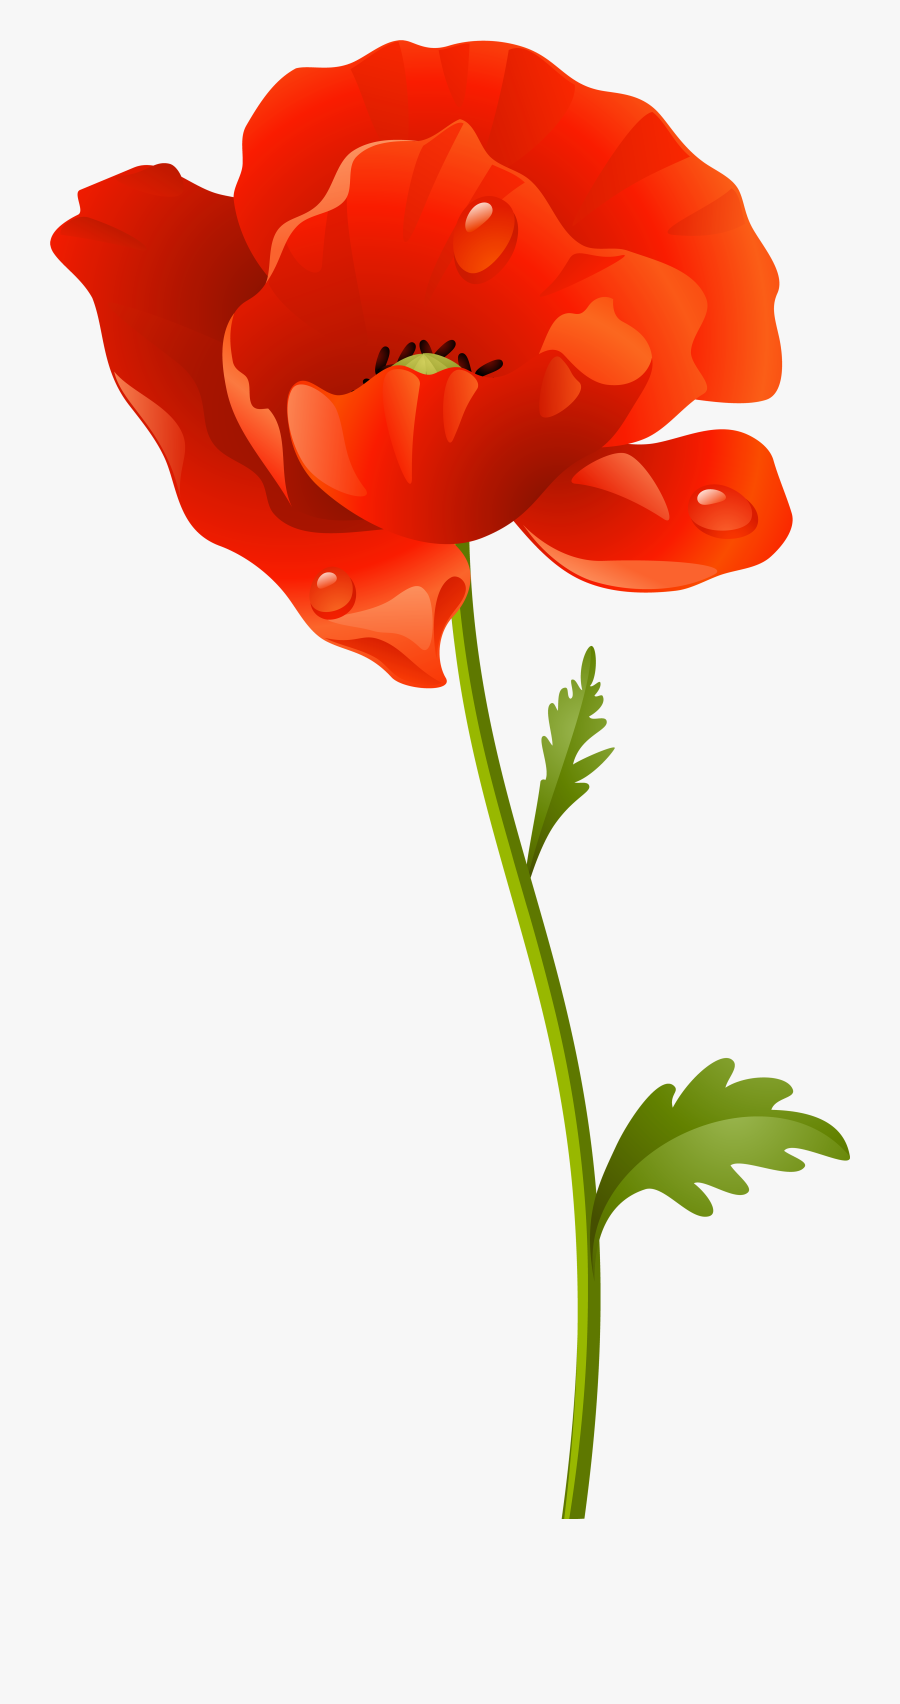 Flowers Clip Art Poppy - Red Poppy Flower Png, Transparent Clipart